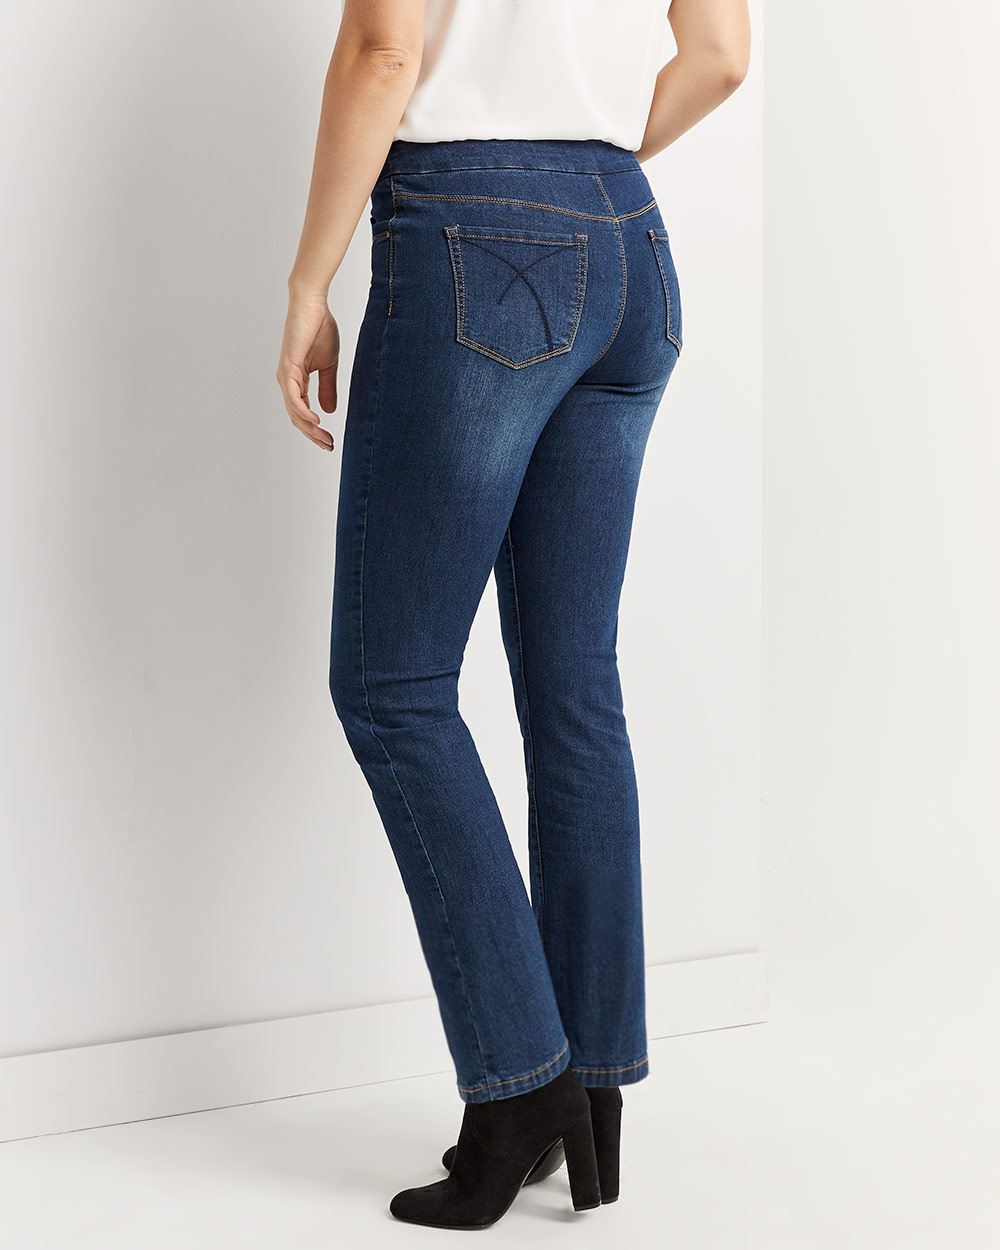 Straight Leg Pull On Jeans The Original Comfort | Regular | Reitmans